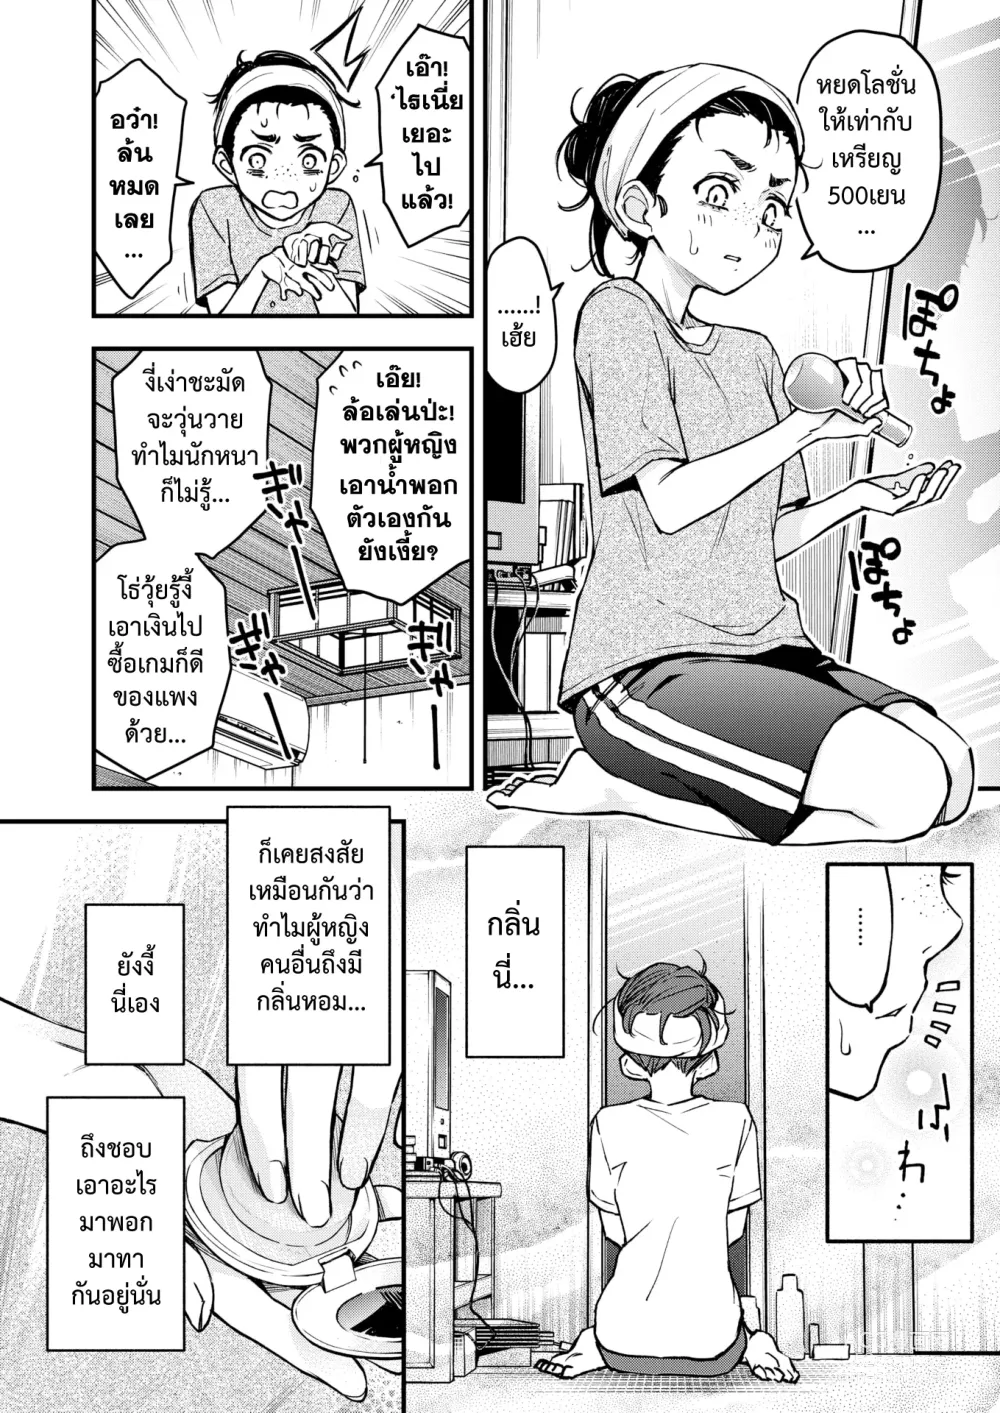 Page 6 of manga เพลงรักของคนหม่น #2 -บทอามาโนะ ยุยกะ-